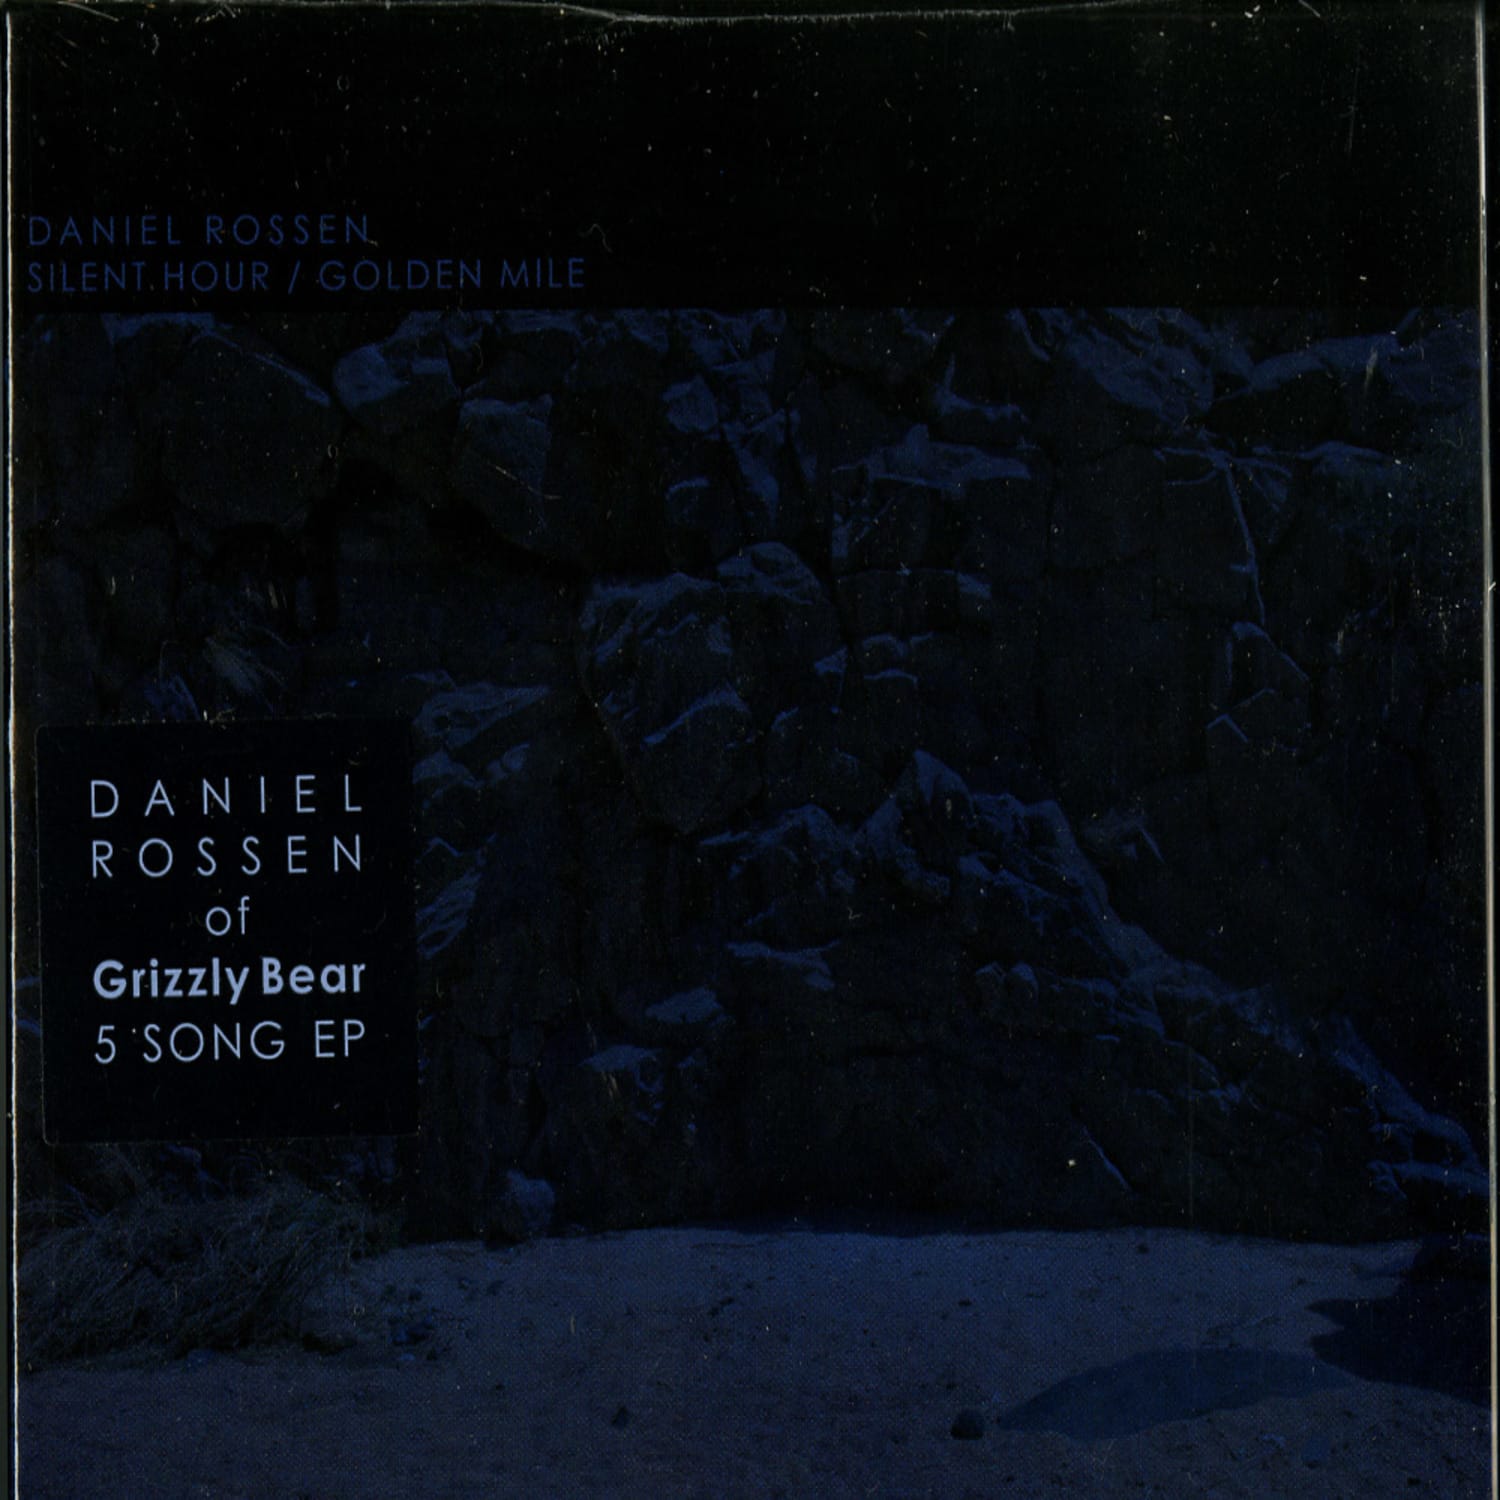 Daniel Rossen - SILENT HOUR / GOLDEN MILE 